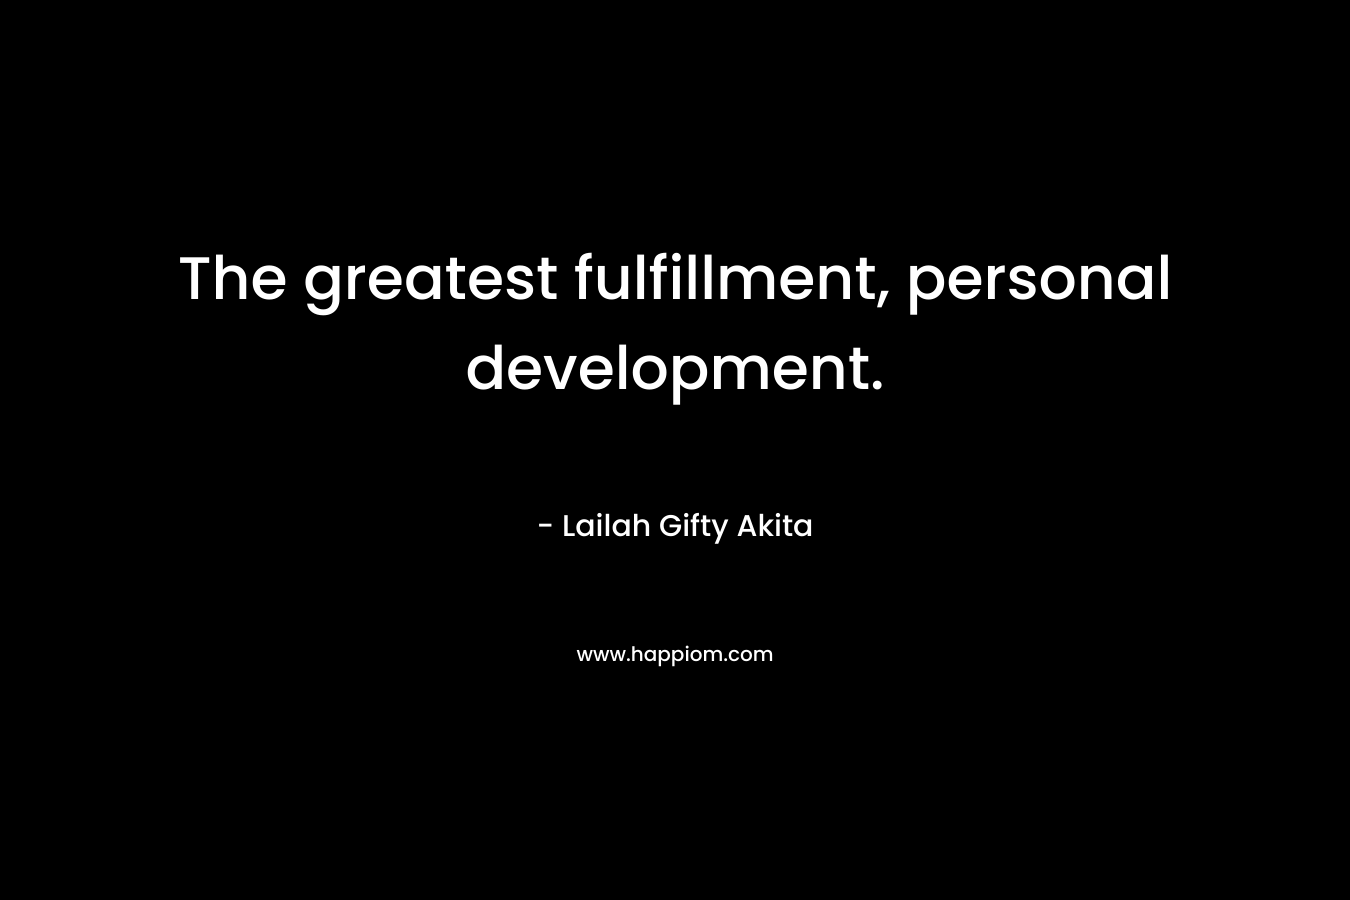 The greatest fulfillment, personal development.